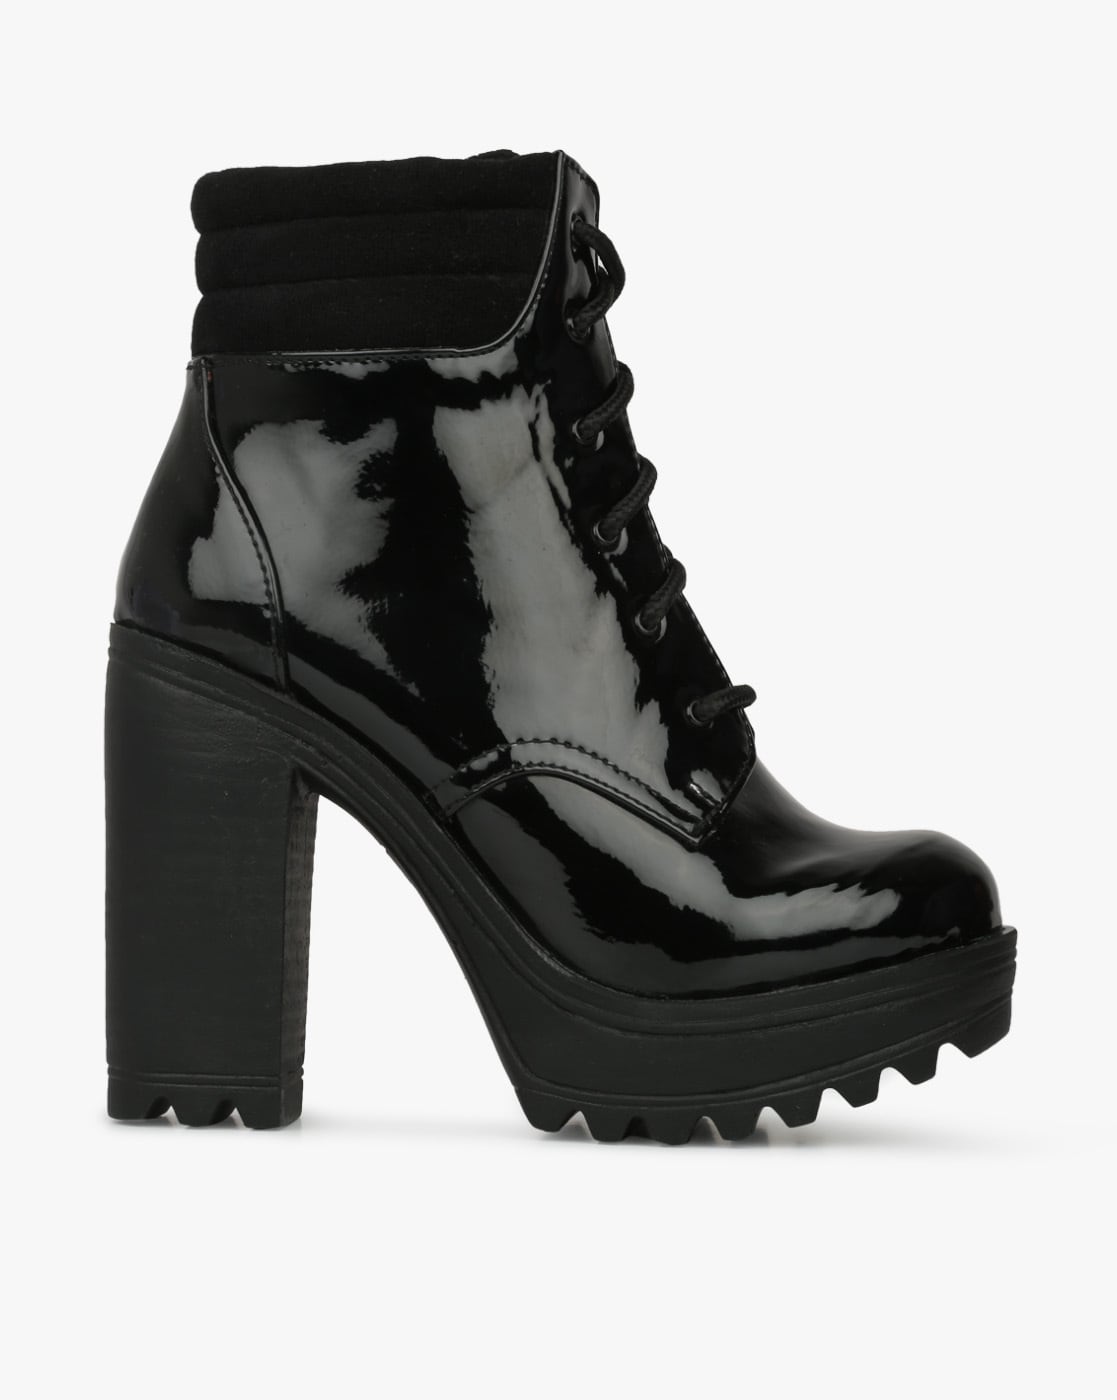 catwalk boots online